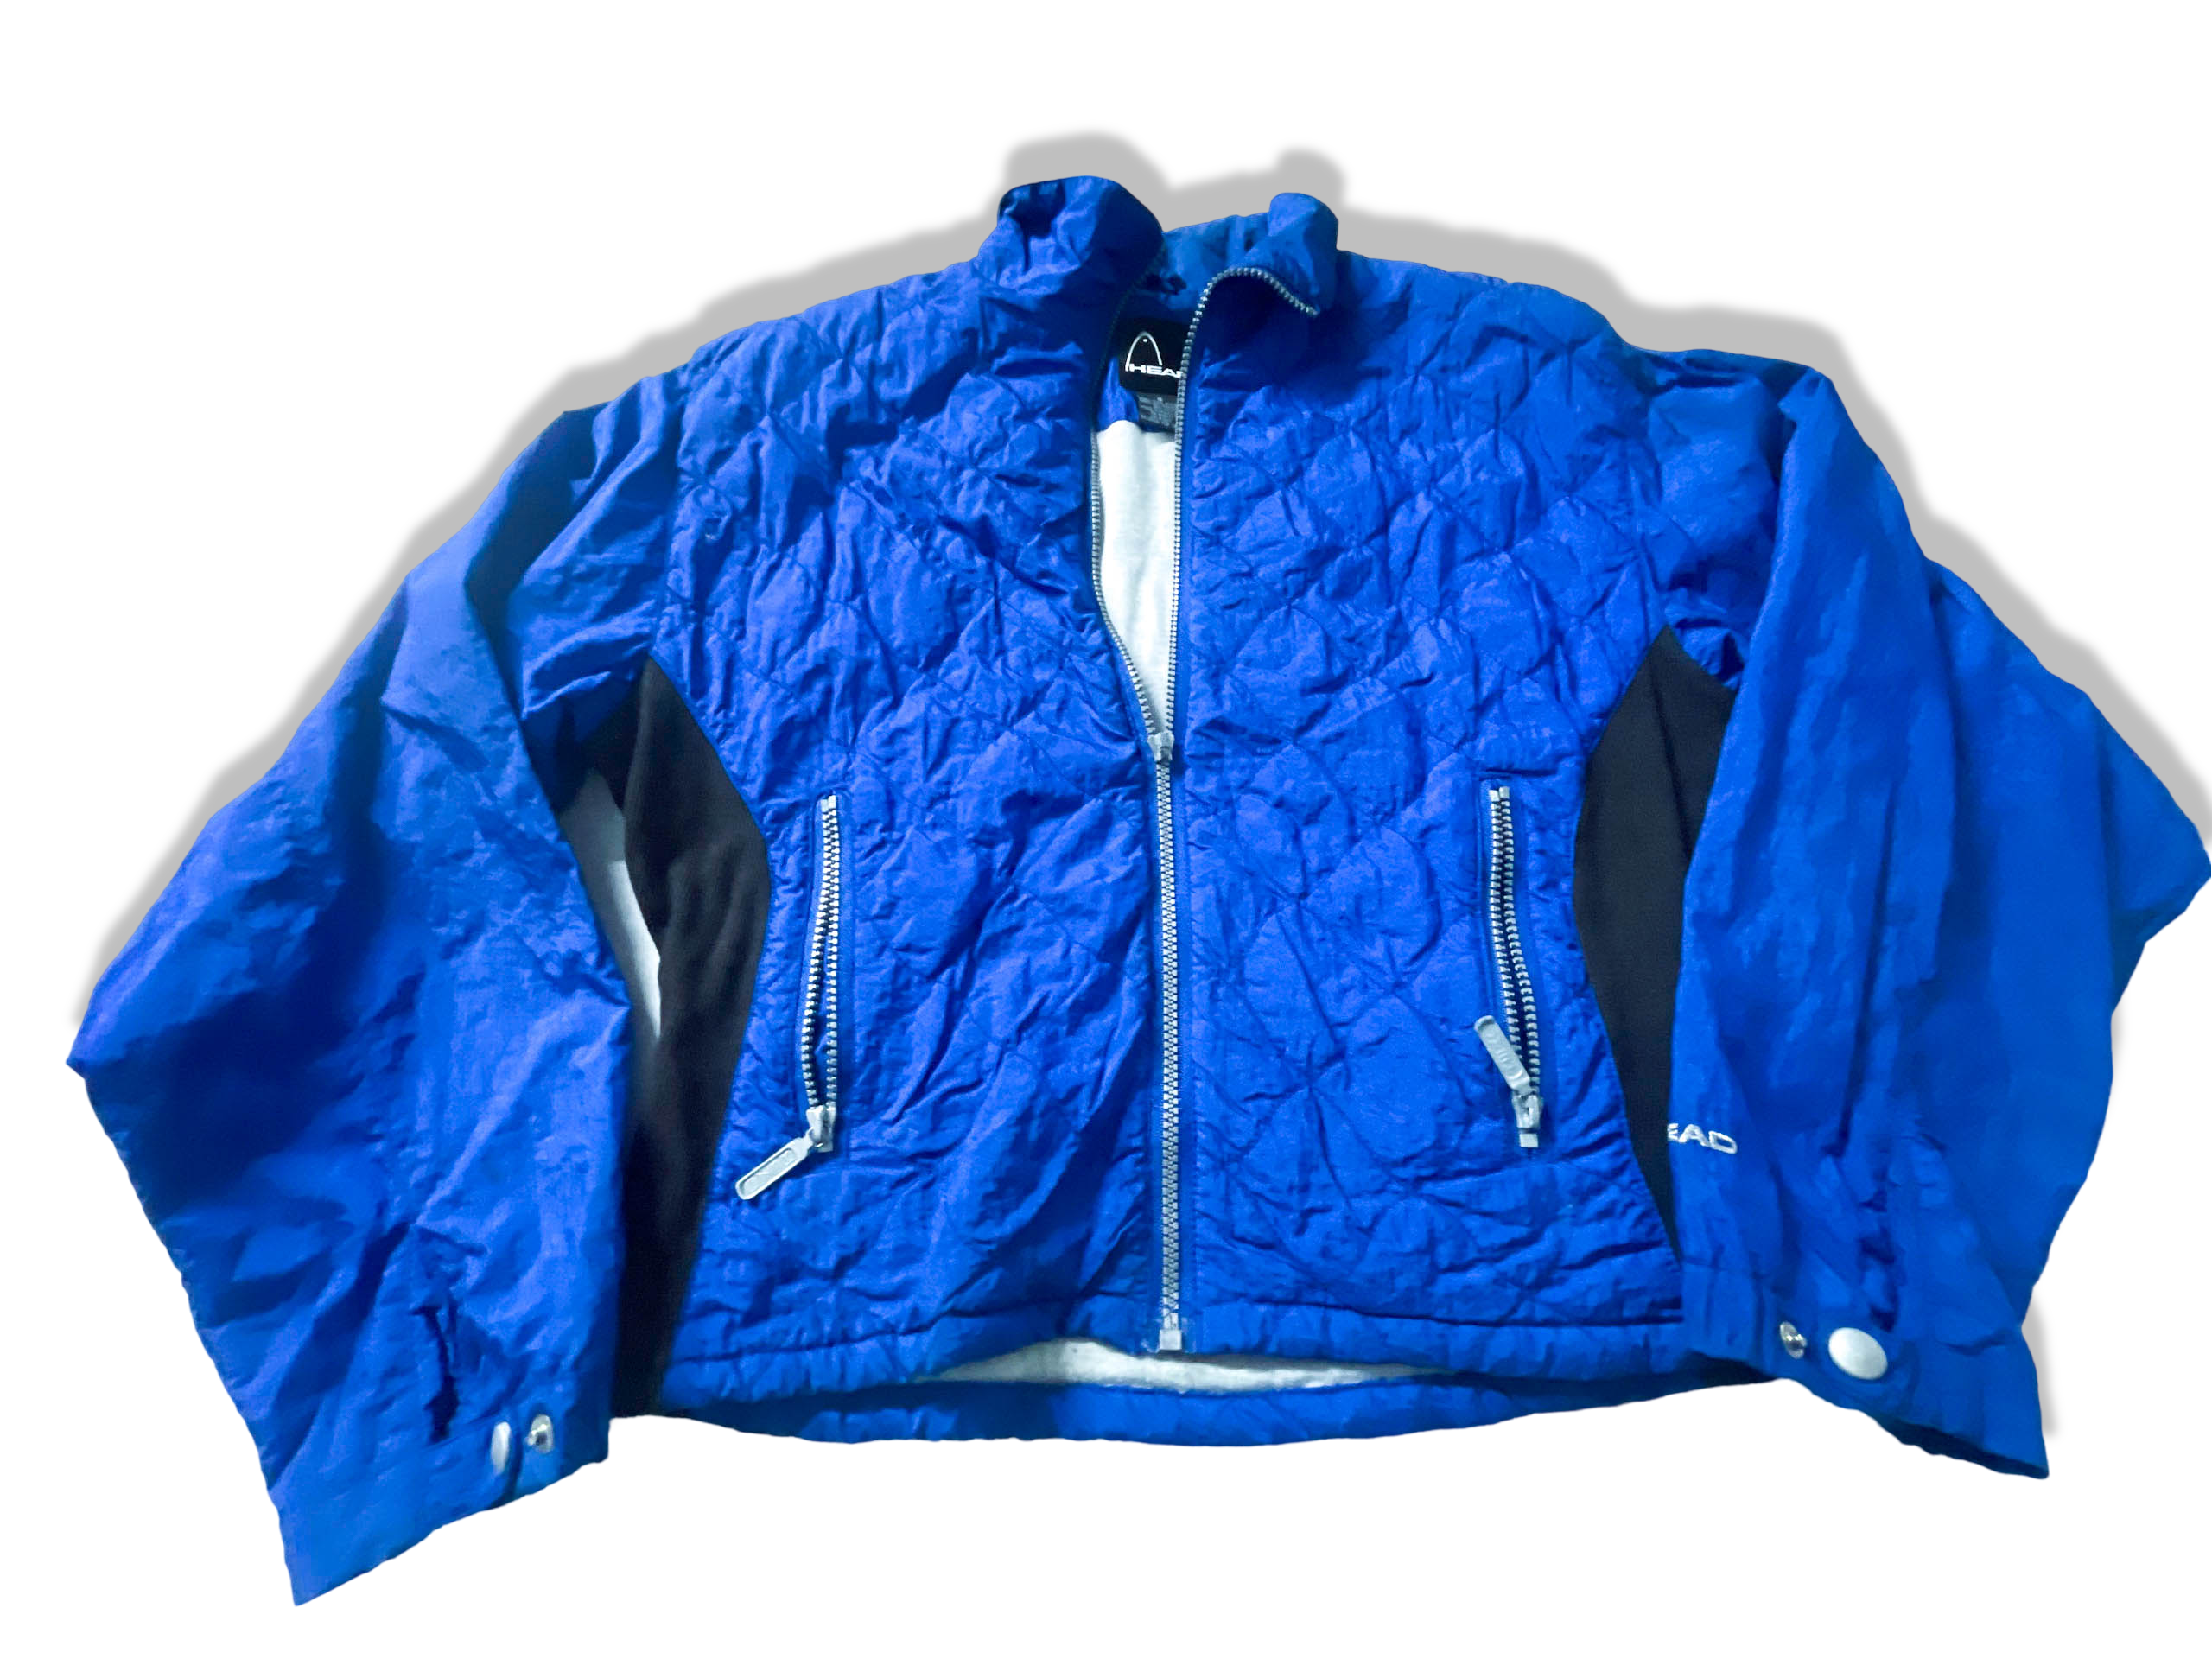 Vintage women's Head blue full zip quilted windbreaker jacket in S|L23W22|SKU 3943|made in Hong Kong